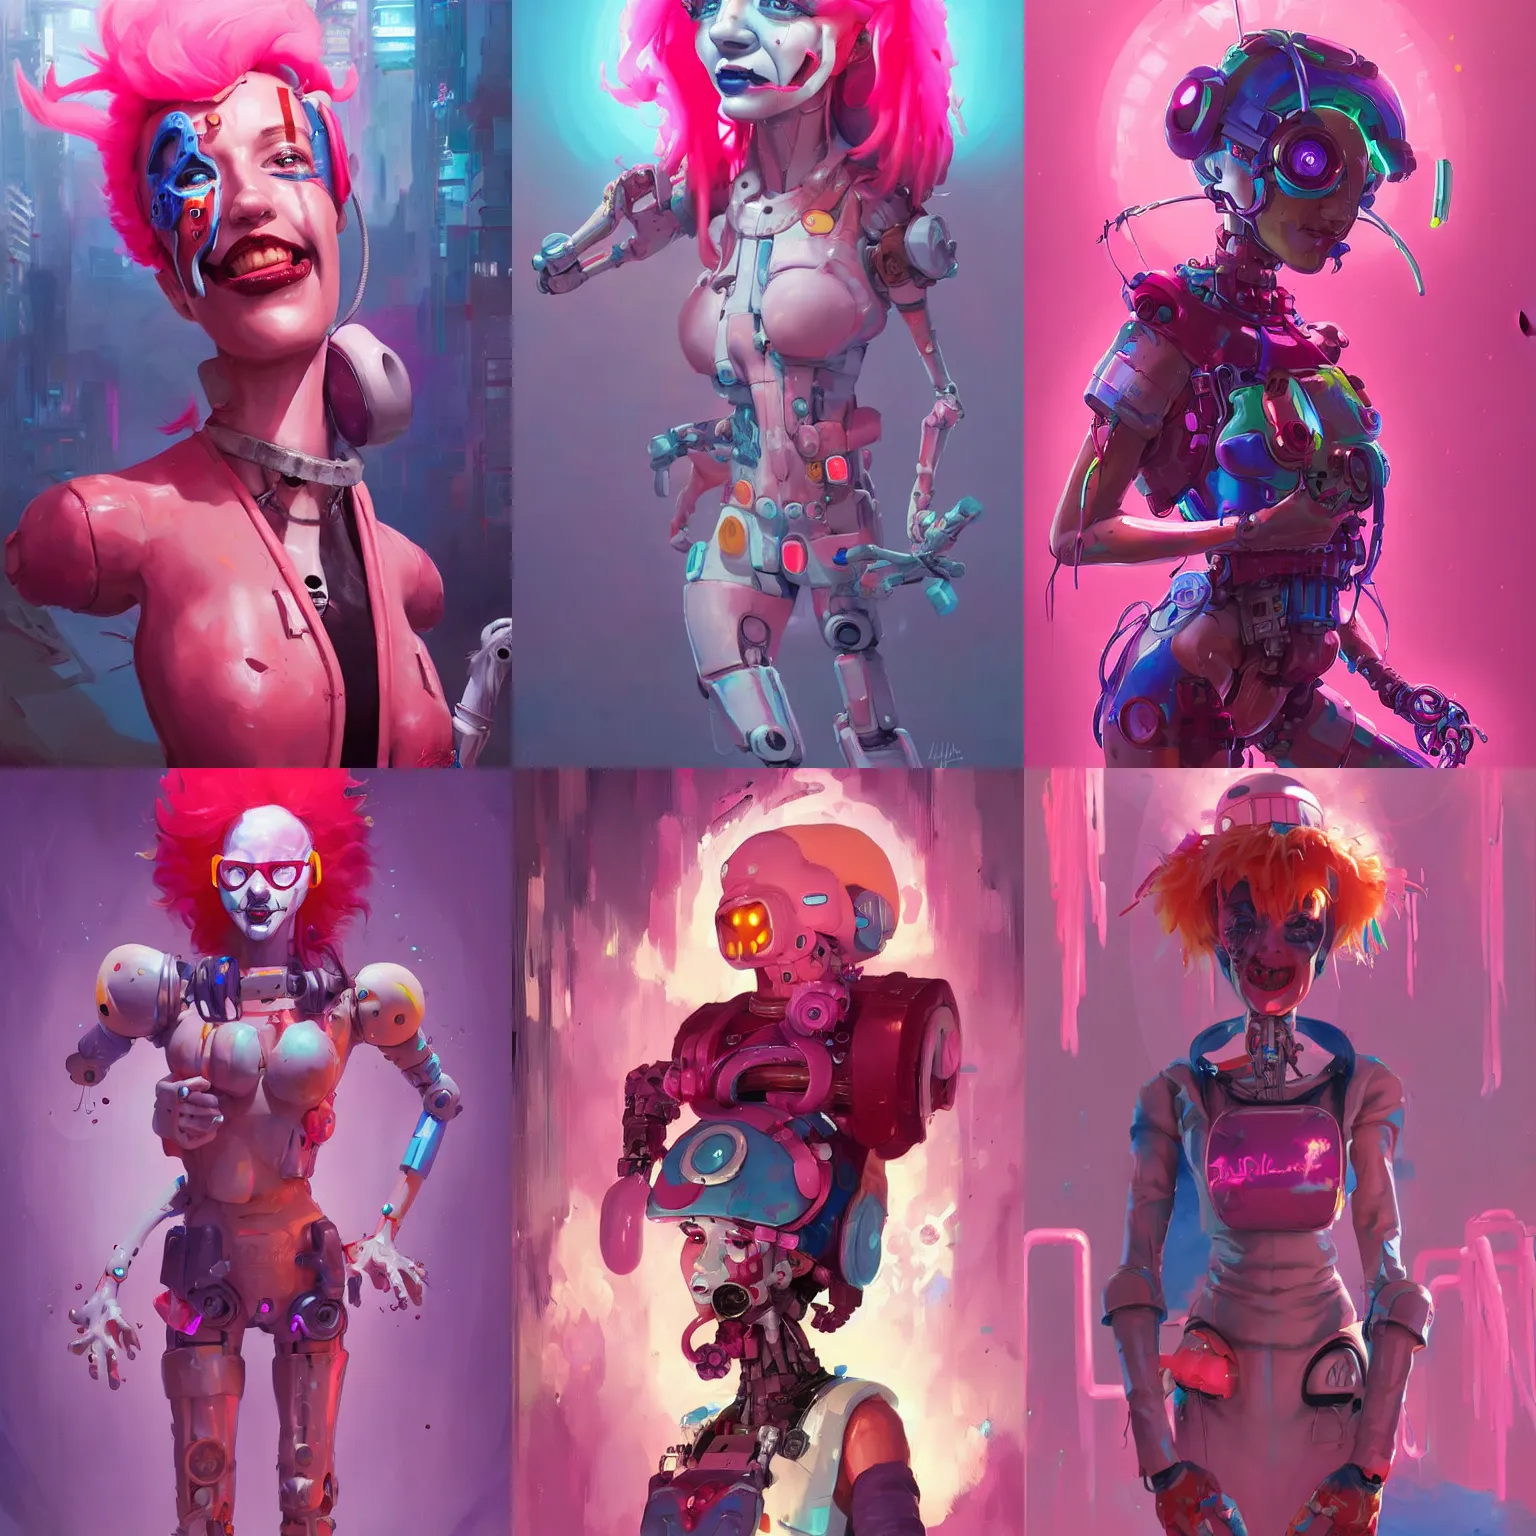 Prompt: cyberpunk clown girl melt a robot made of pink slime, cartoon, transparent, behance hd artstation by jesper ejsing by rhads, makoto shinkai and lois van baarle, ilya kuvshinov, ossdraws